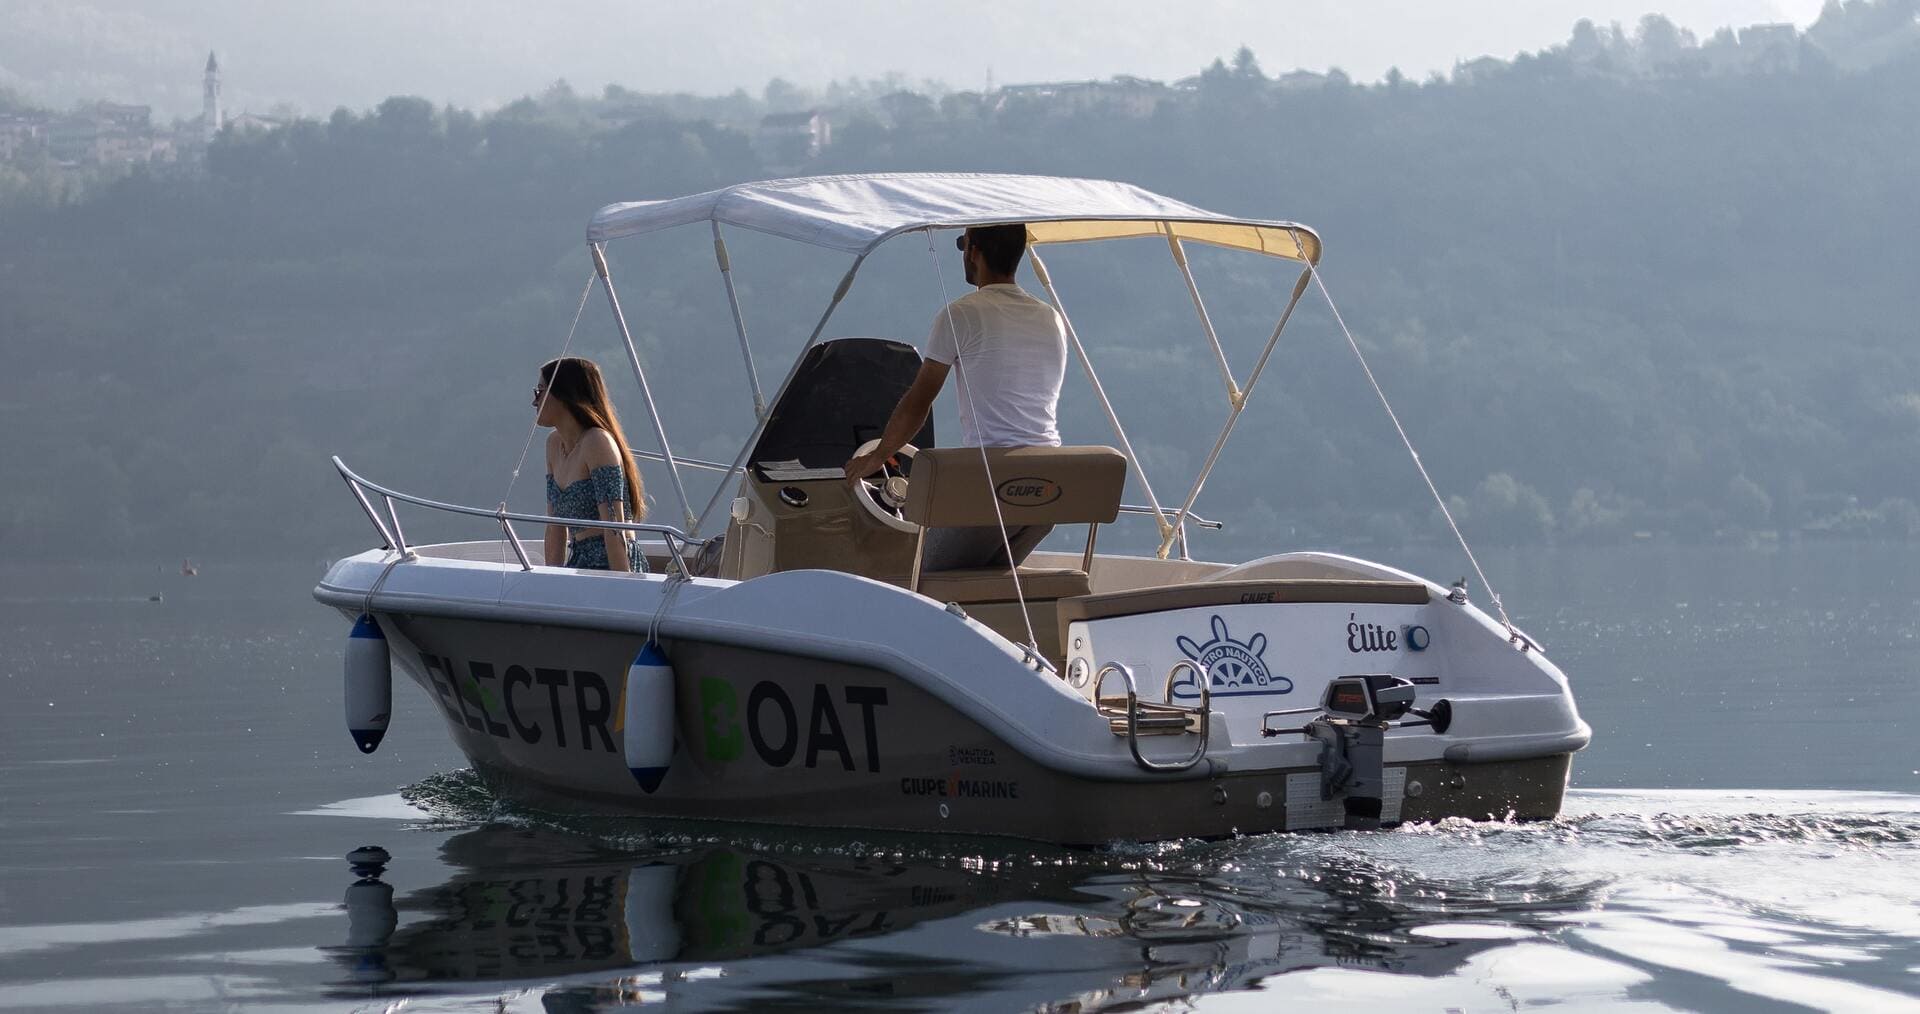 Elite electric boat